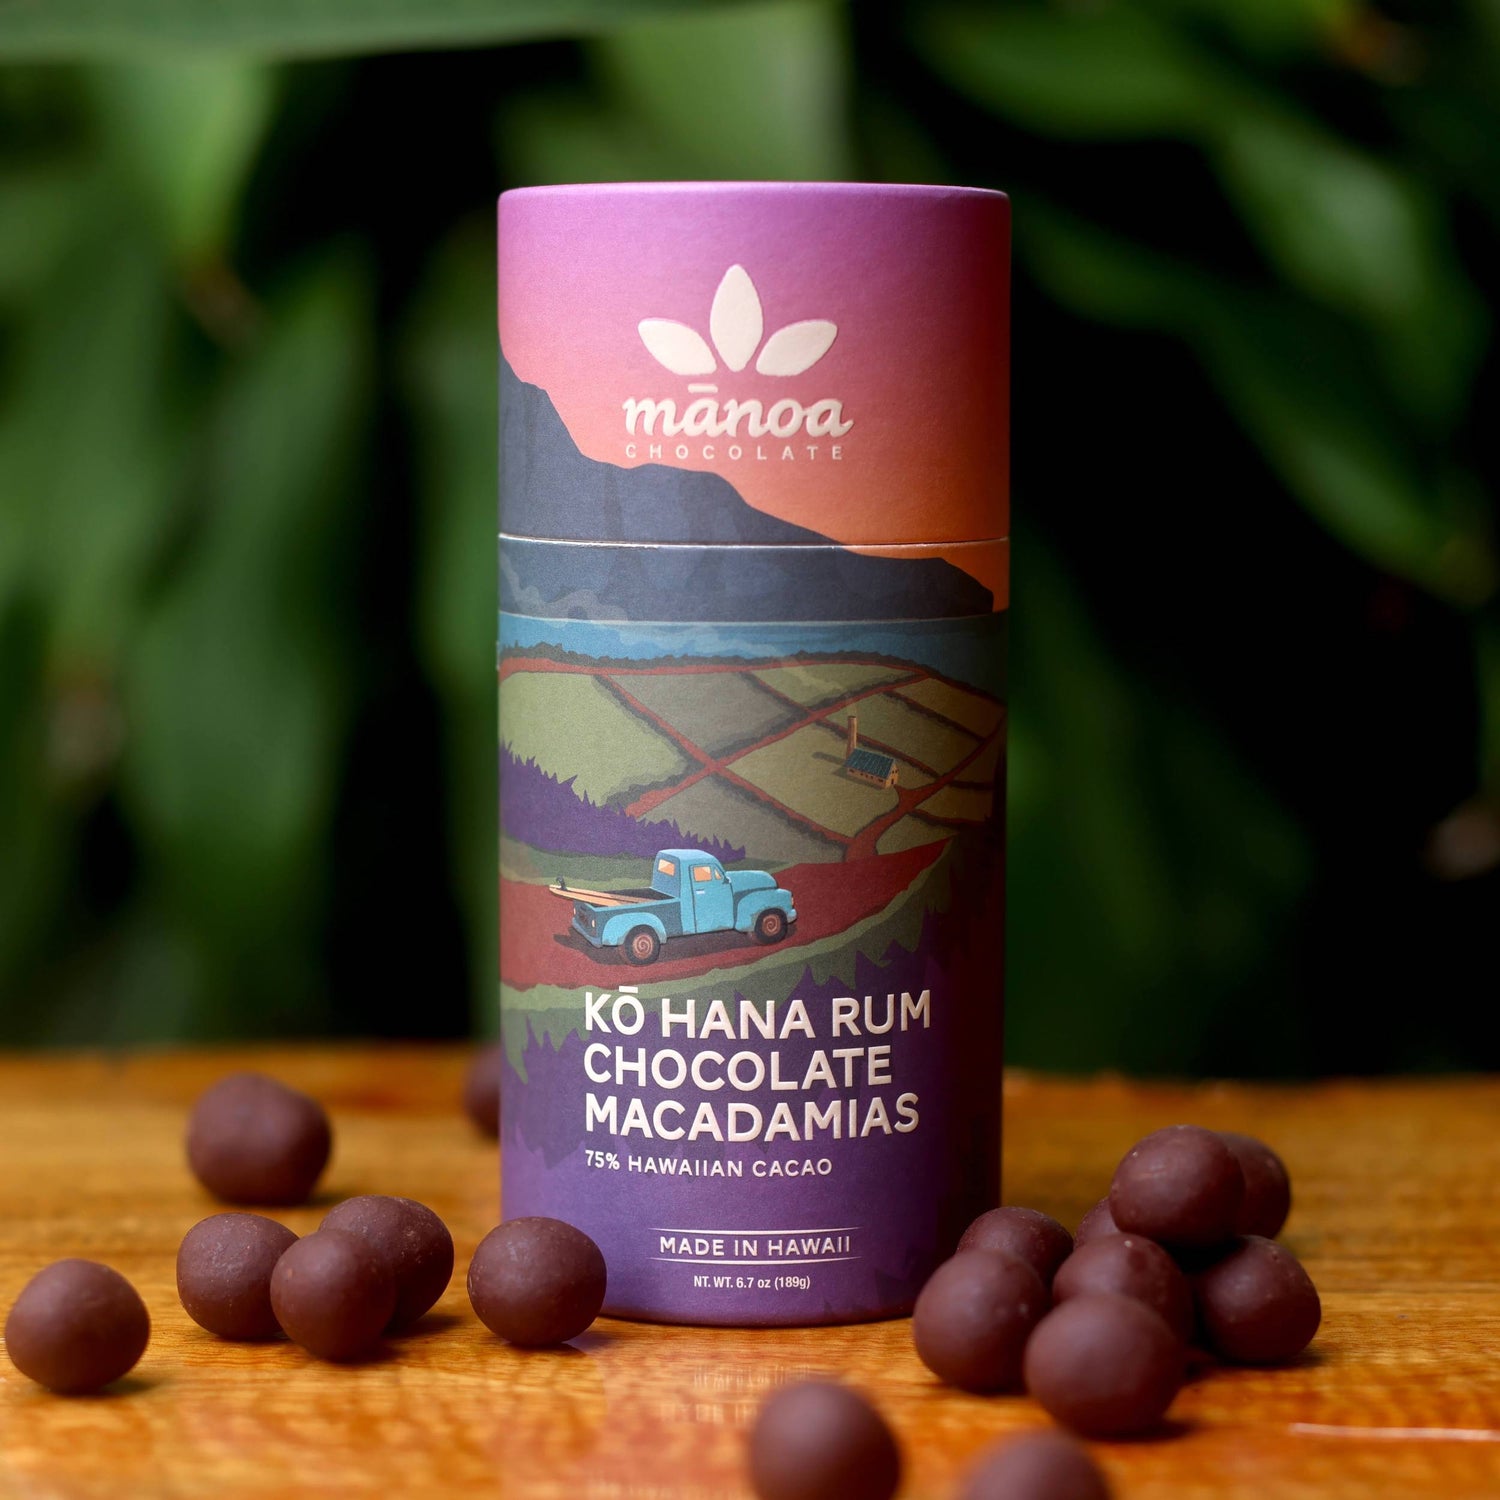 Image of purple tube of Kohana rum chocolate macadamias